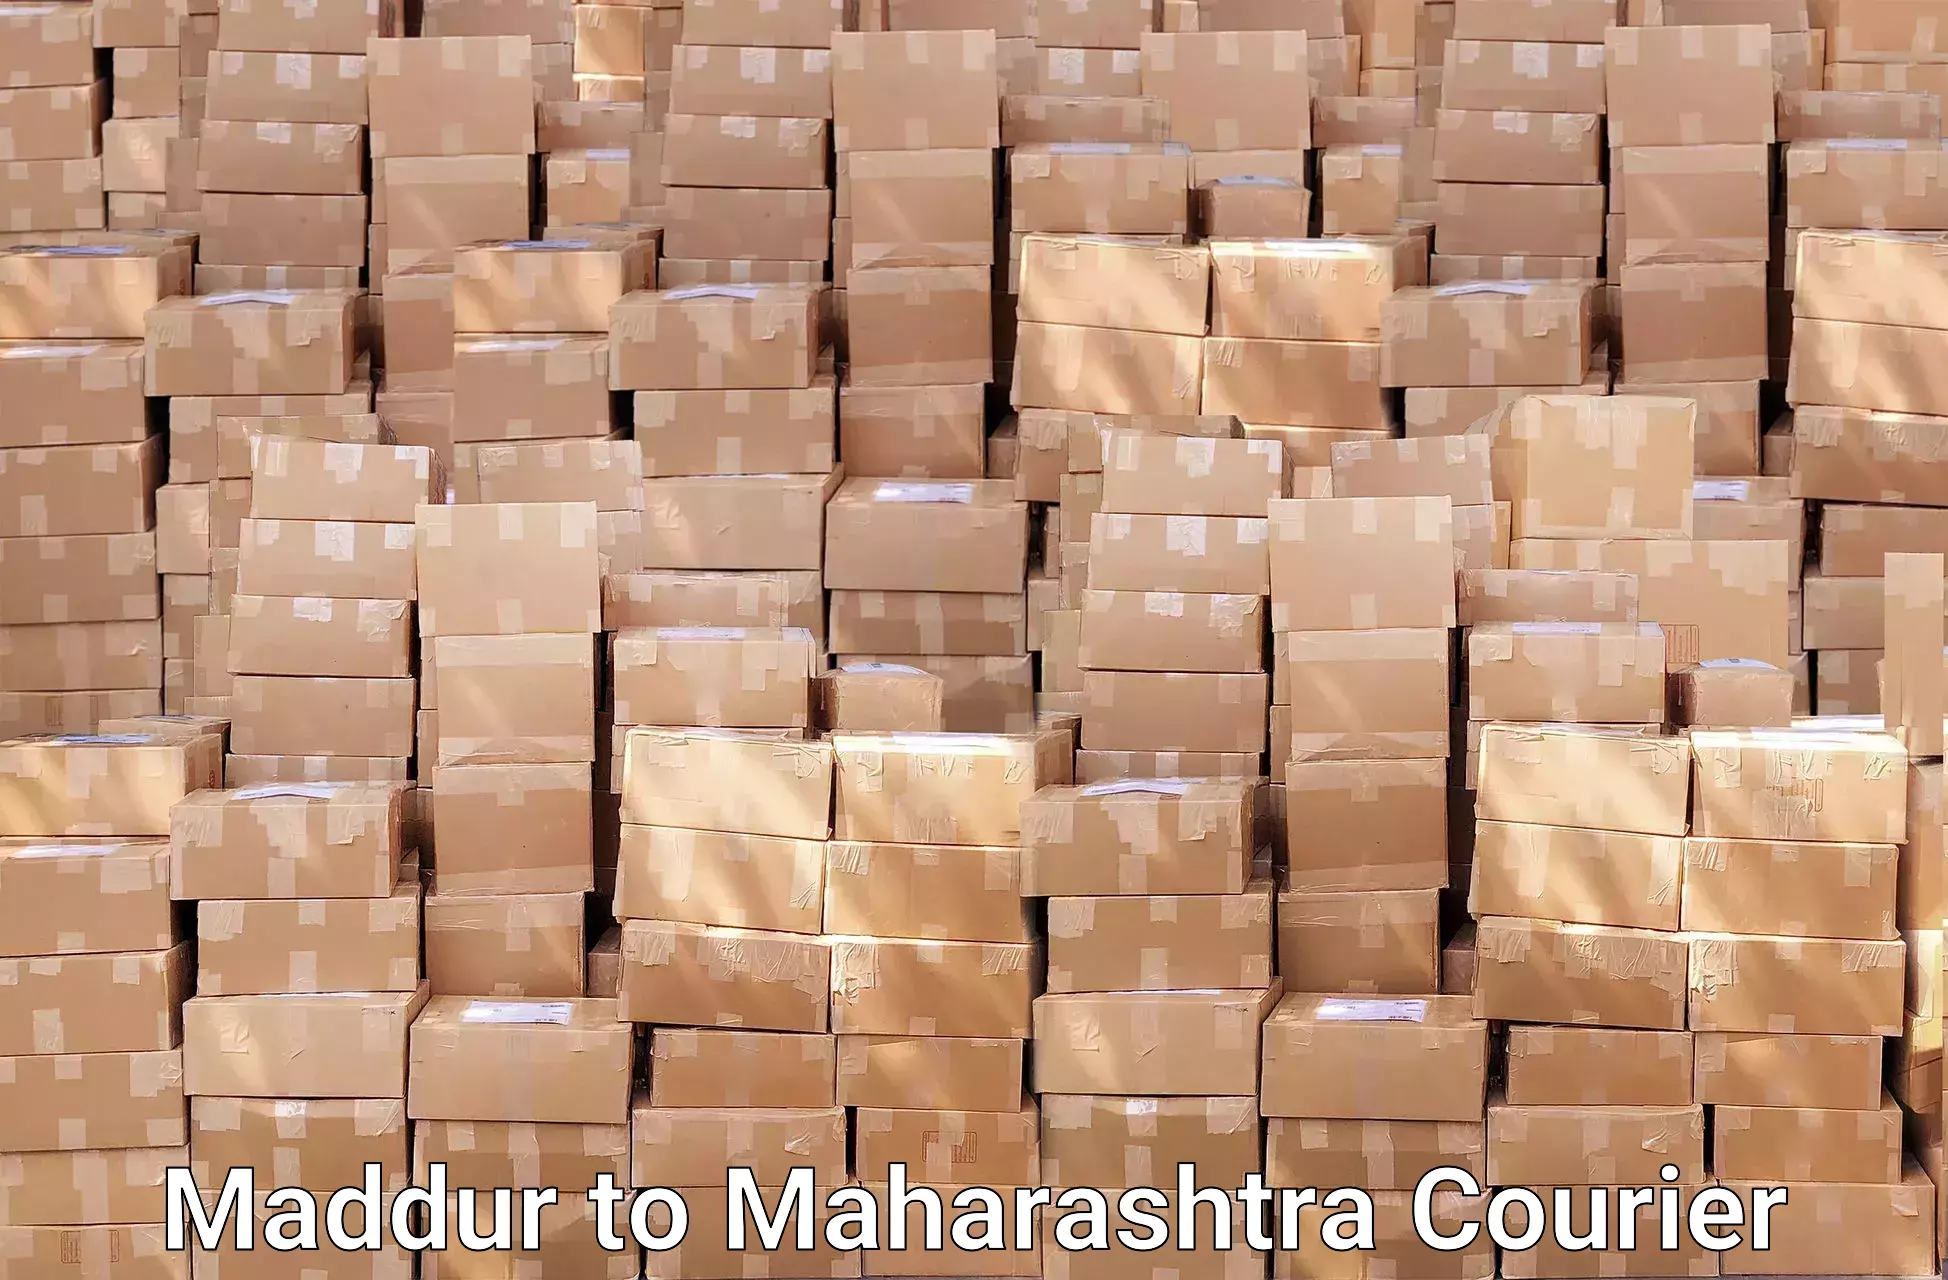 Moving and packing experts Maddur to Maharashtra